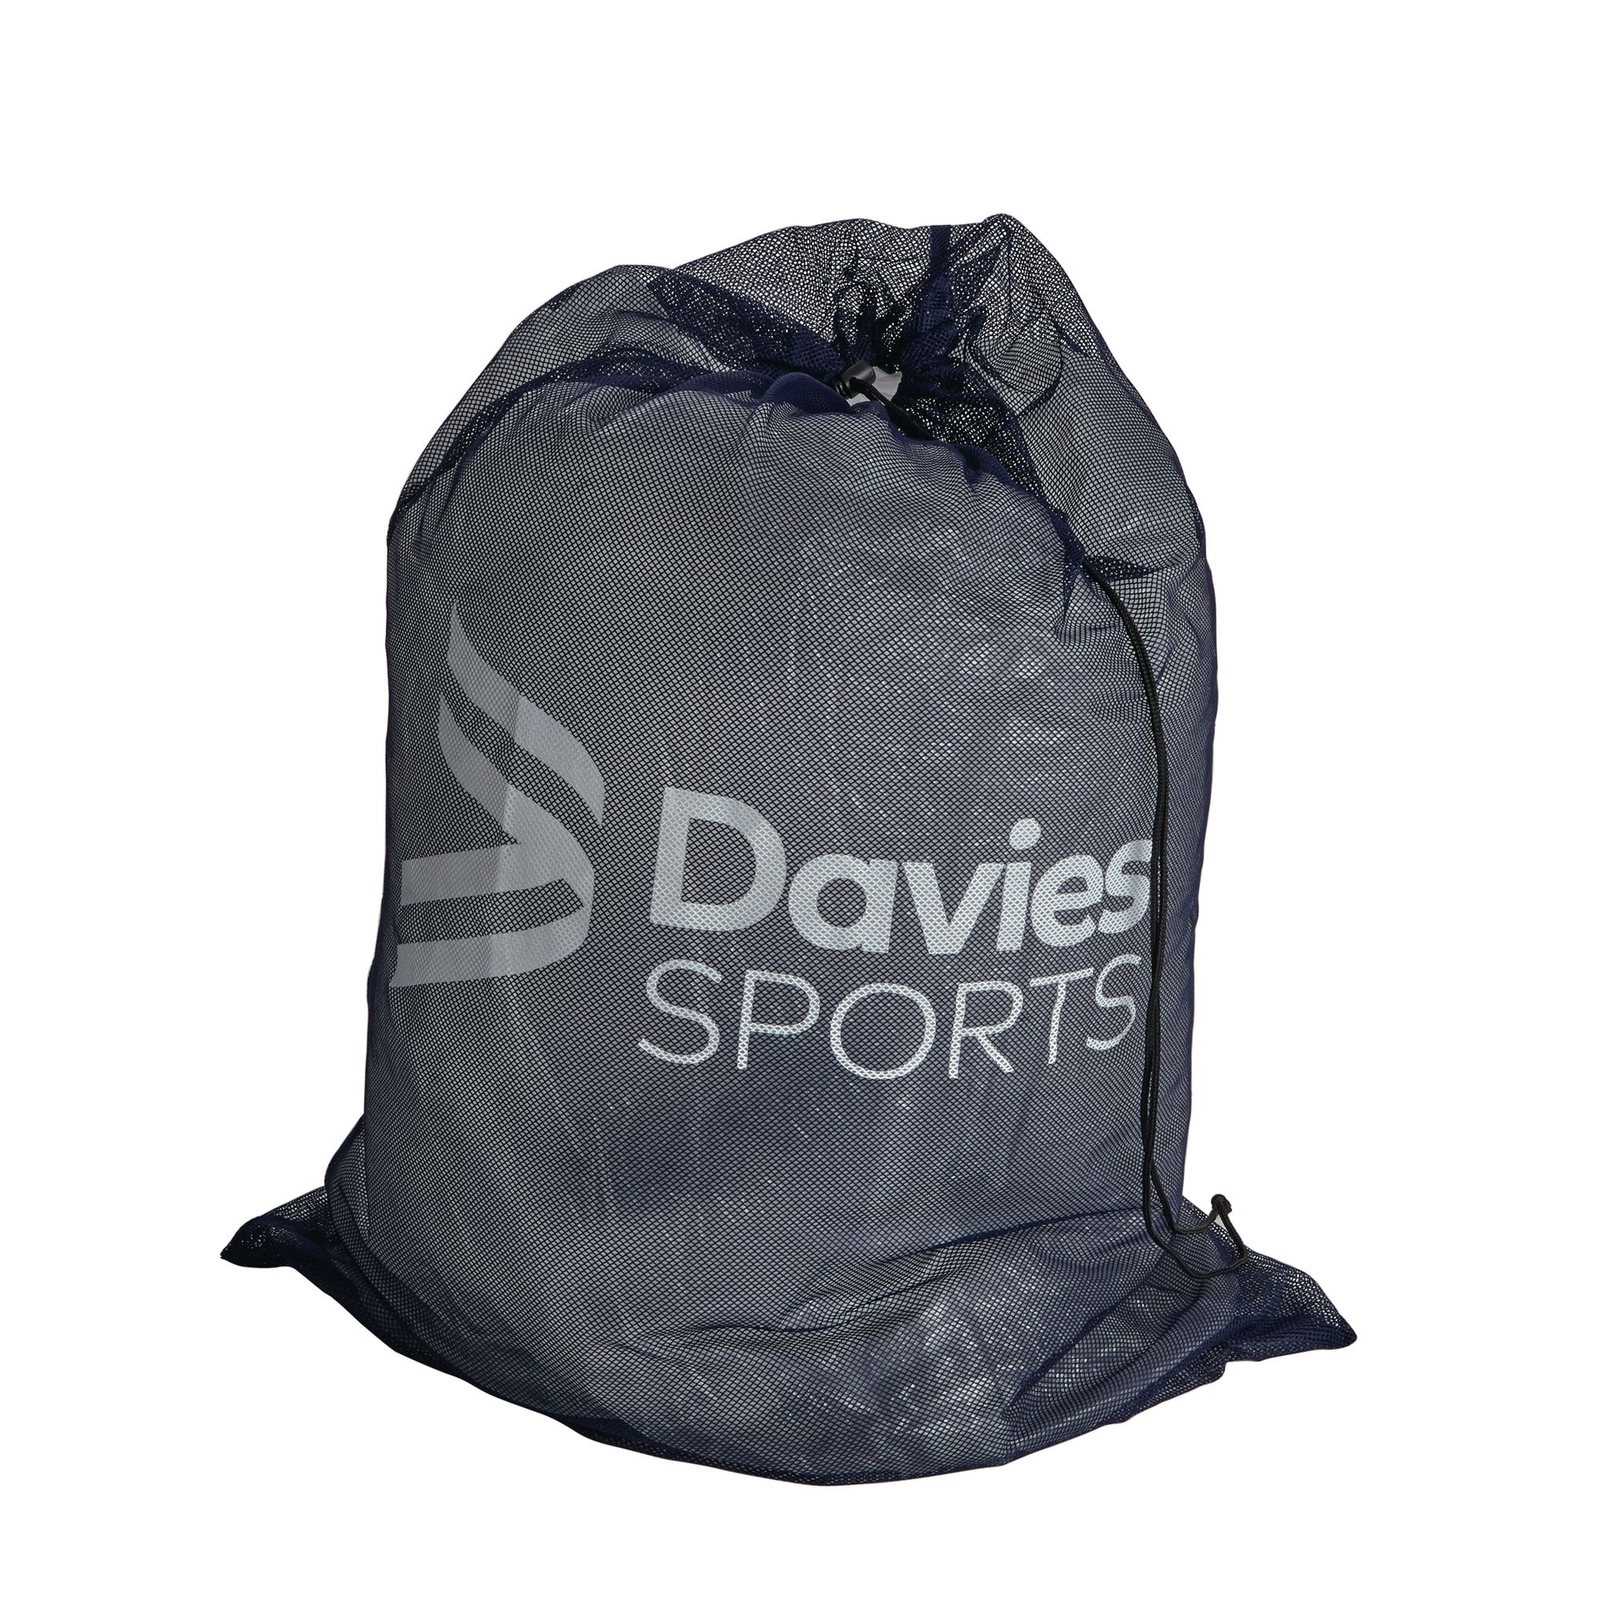 Davies Sports Mesh Ball Bag